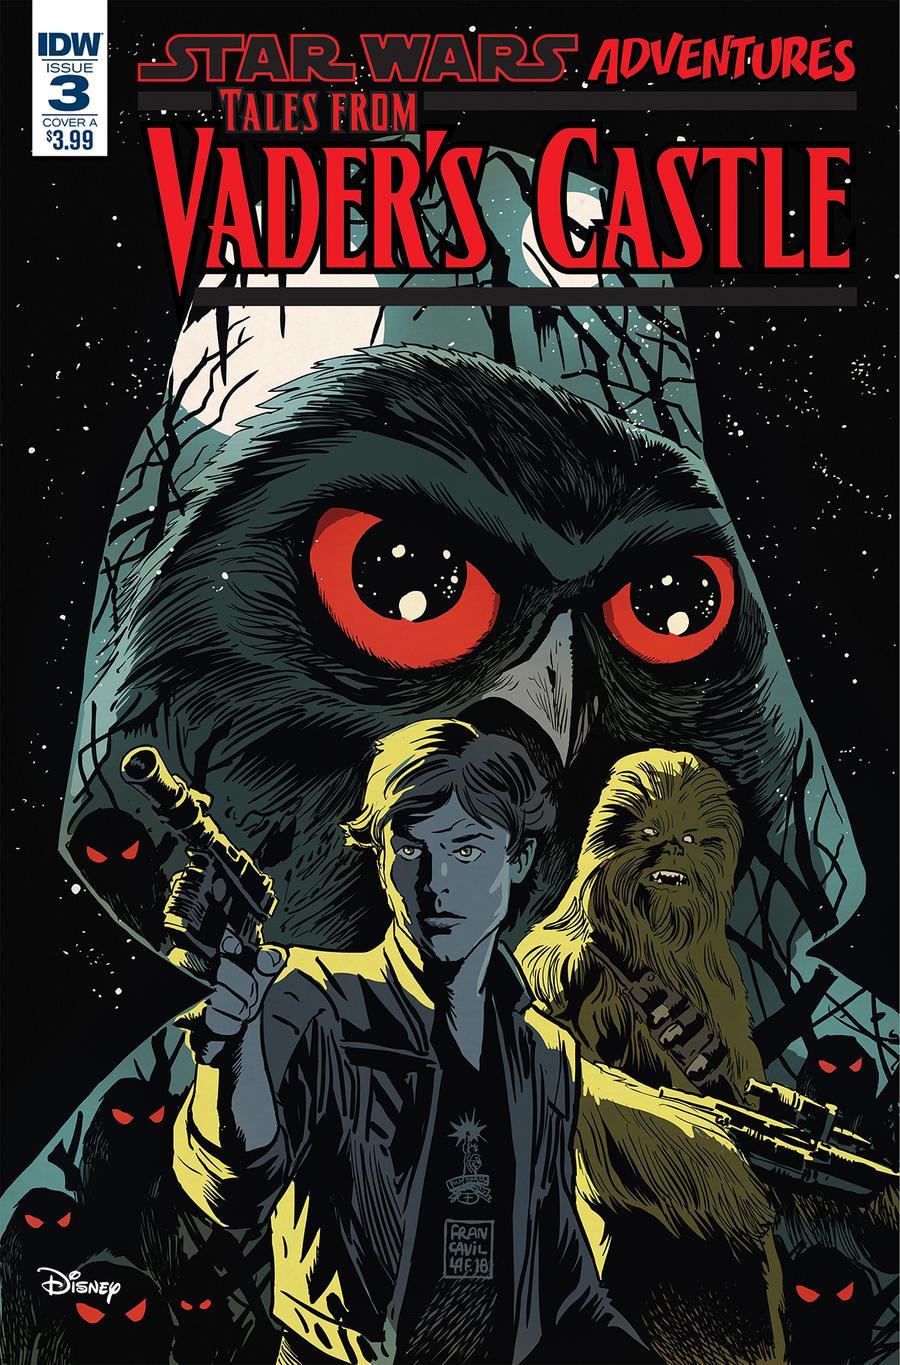 Star Wars Adventures Tales From Vaders Castle Vol. 1 #3